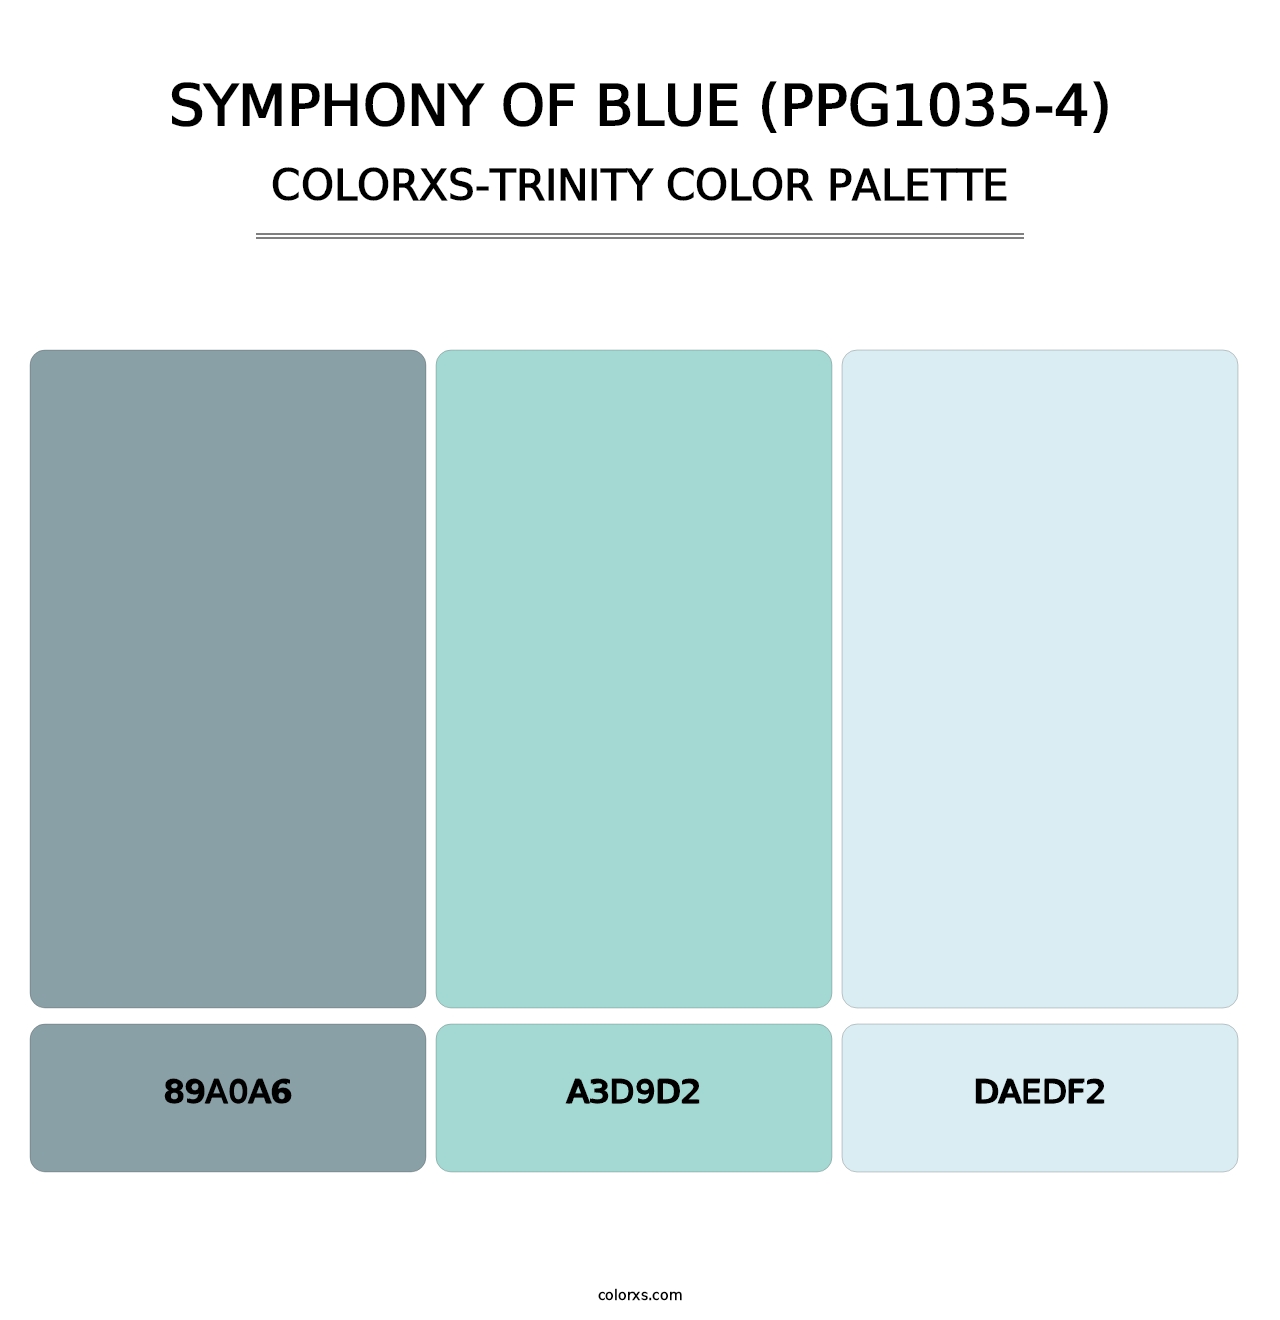 Symphony Of Blue (PPG1035-4) - Colorxs Trinity Palette